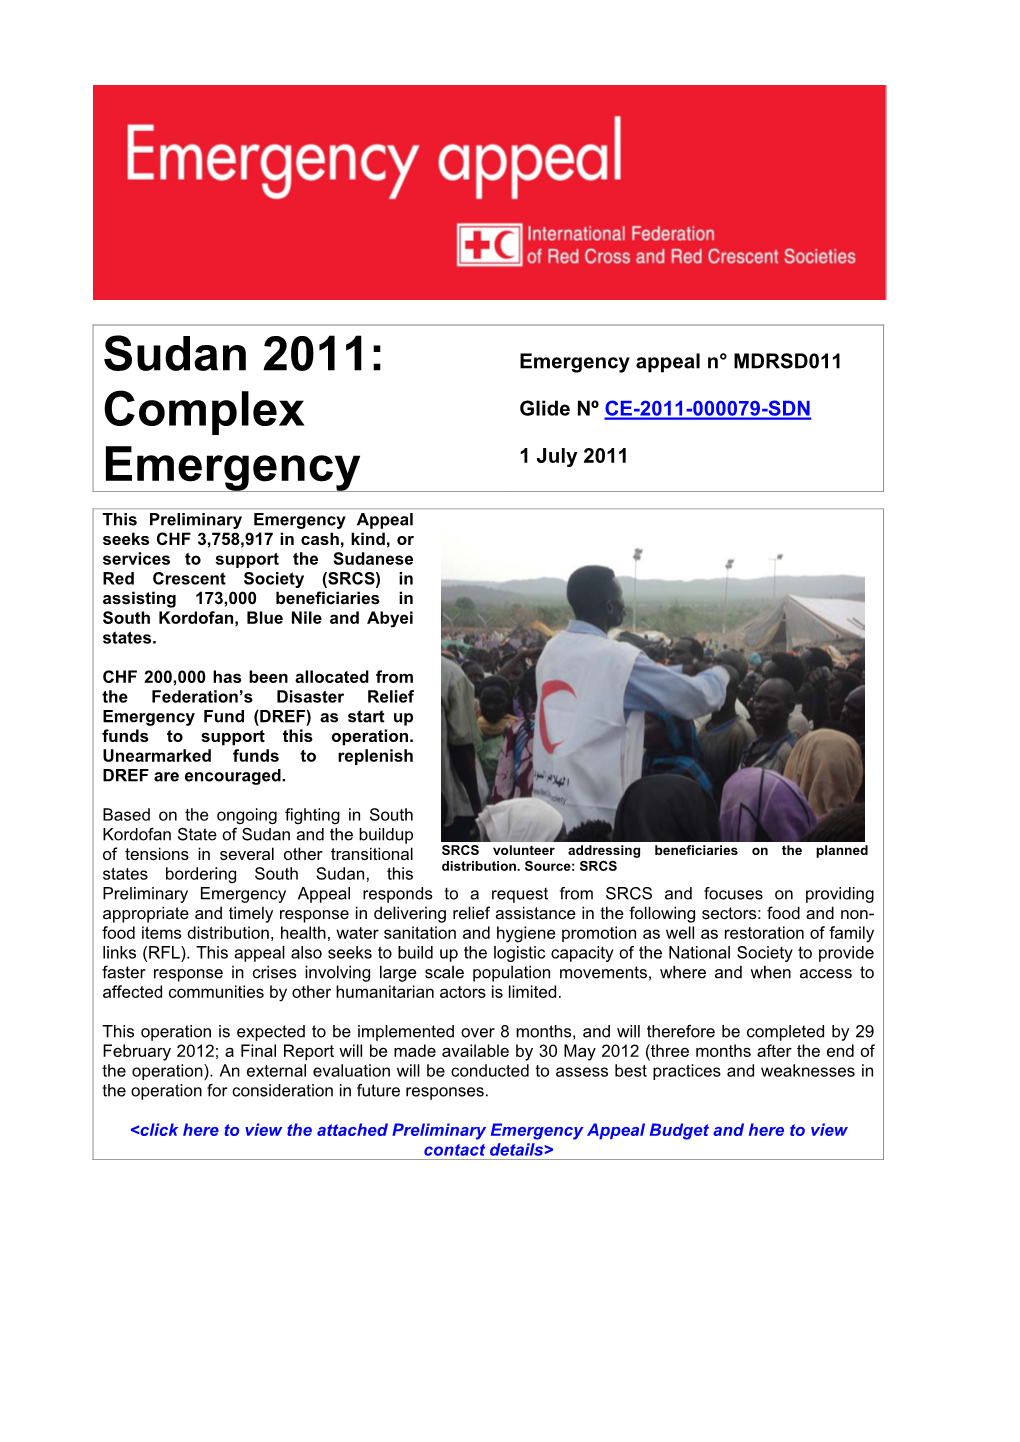 Sudan 2011: Complex Emergency 01/07/2011